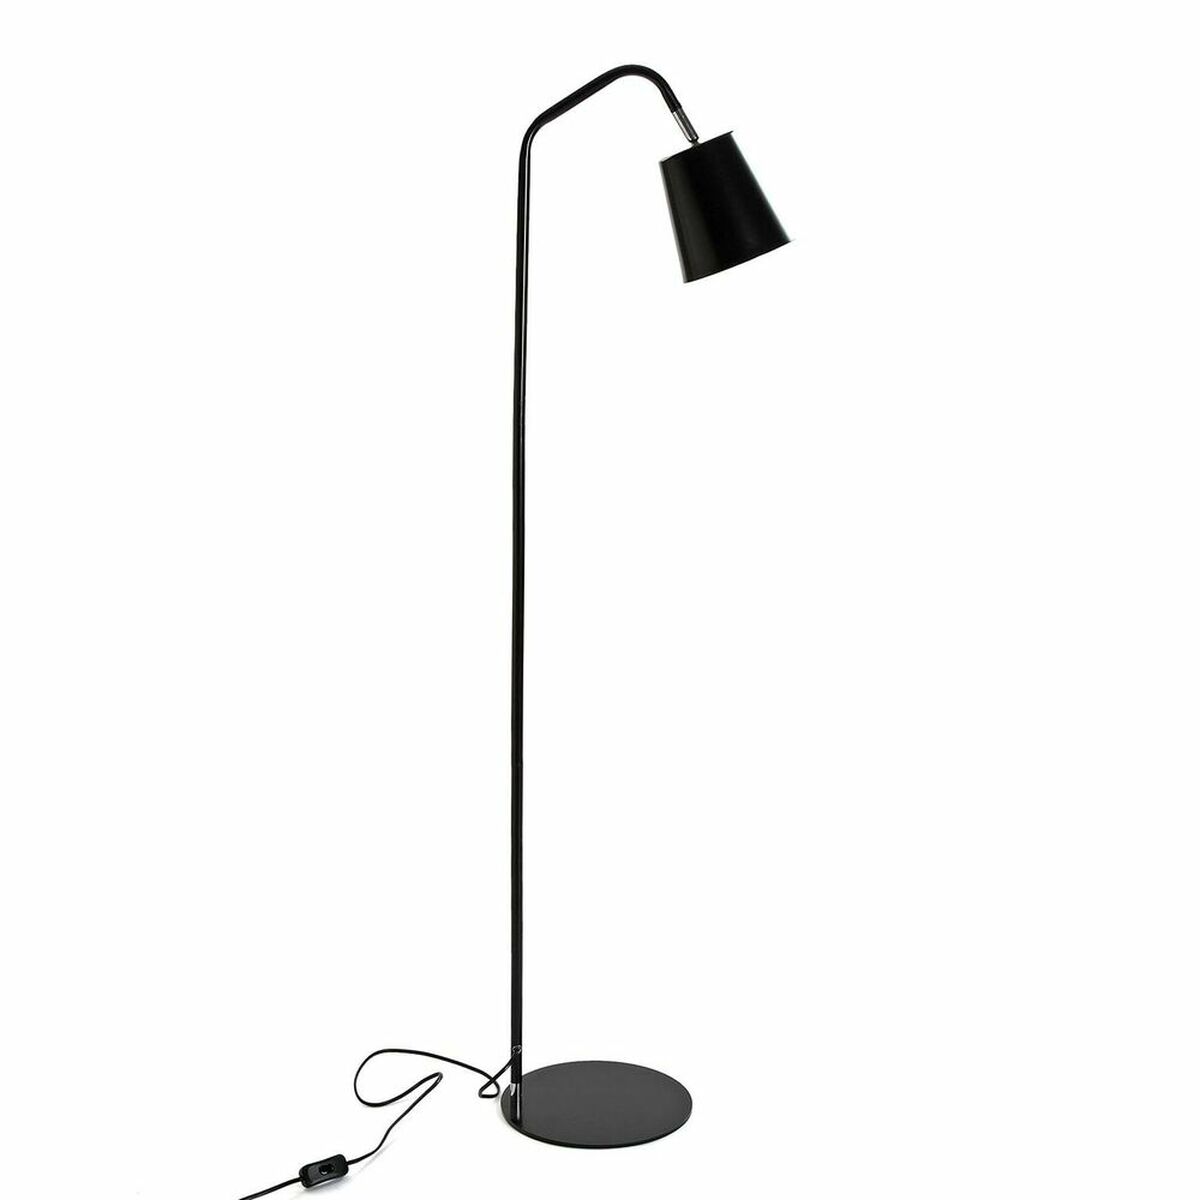 Лава Лампа с Колона и Микрофон Flow Lamp InnovaGoods